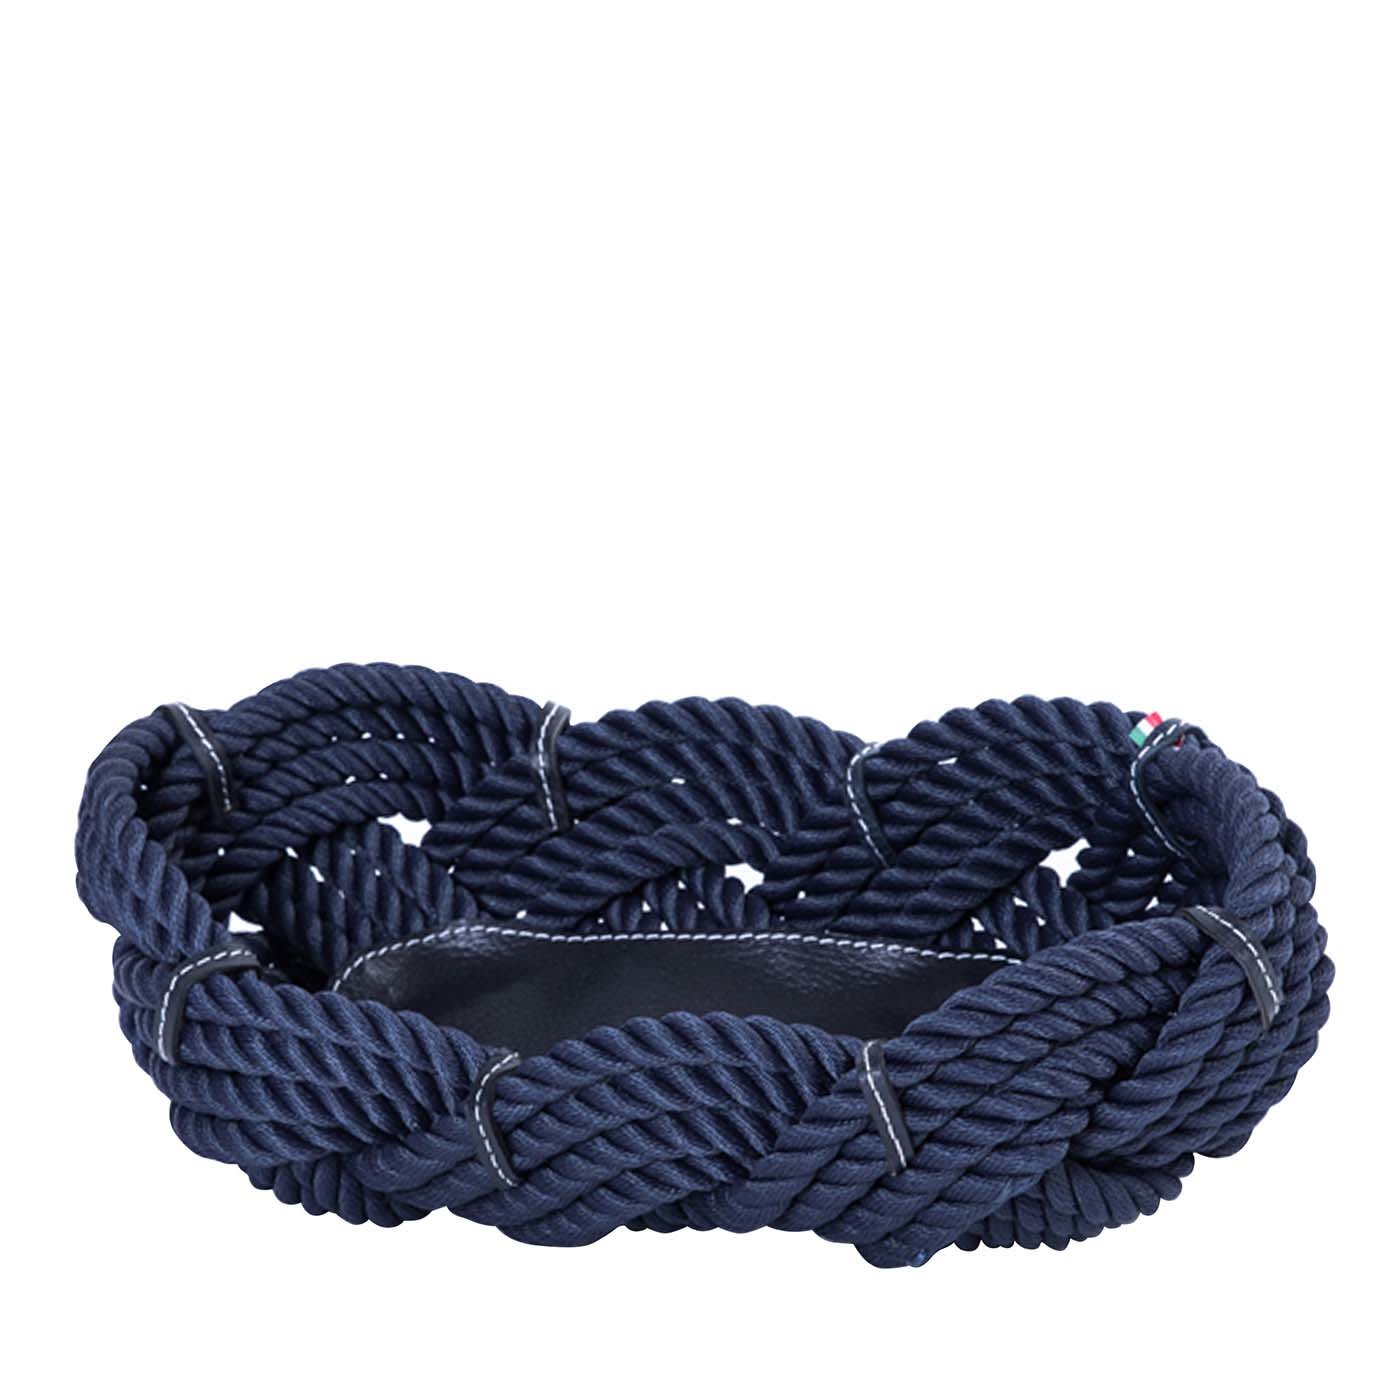 Oval Blue Rope Basket - Marricreo